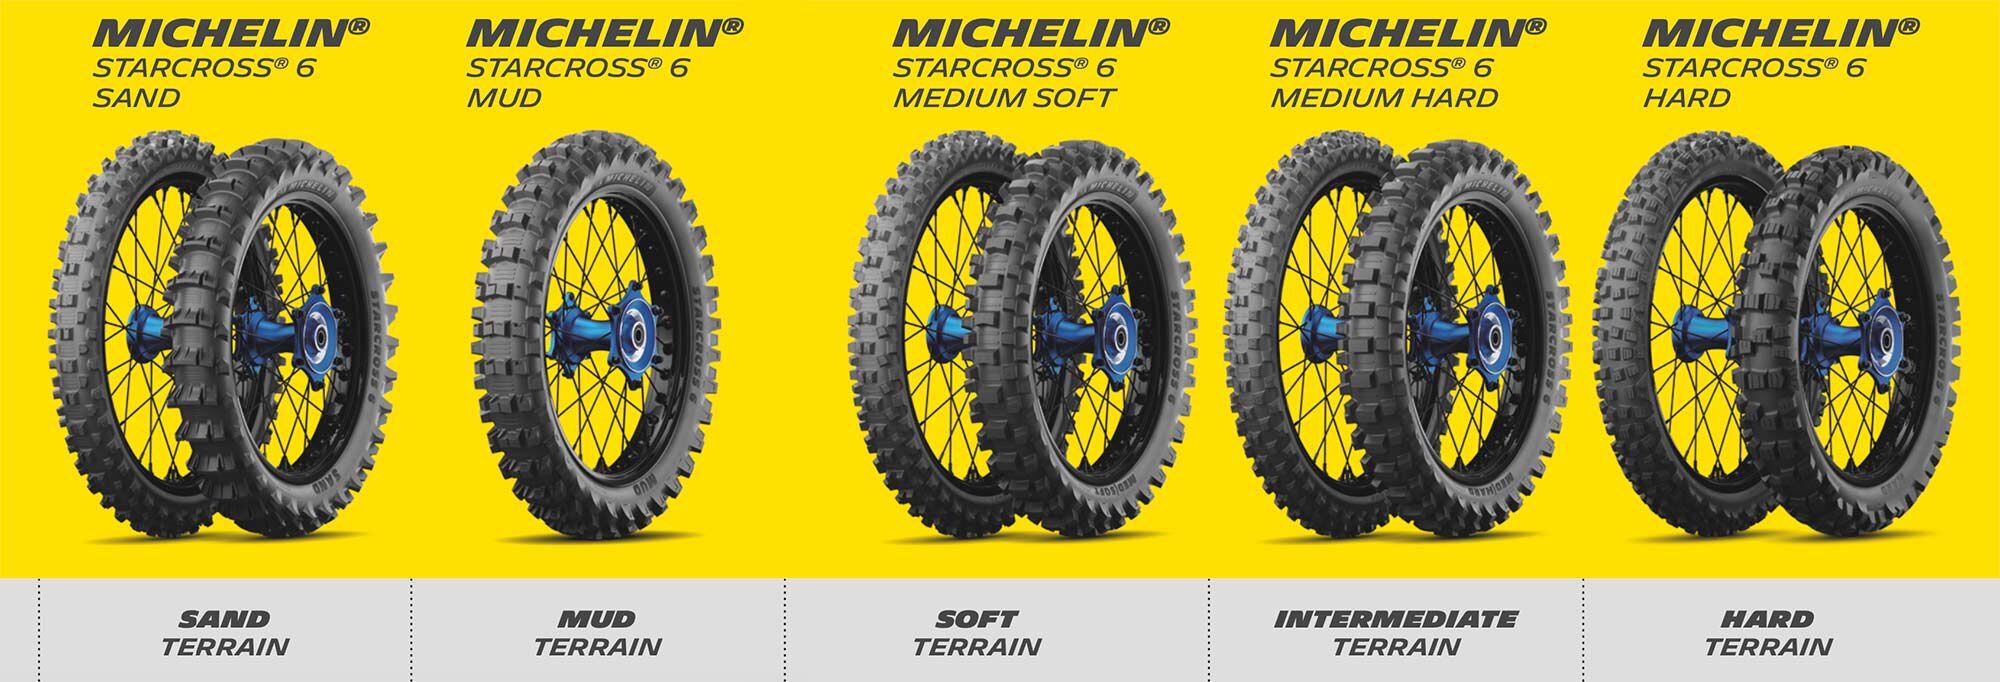 Michelin StarCross 6 Medium Soft and Medium Hard Tires Review